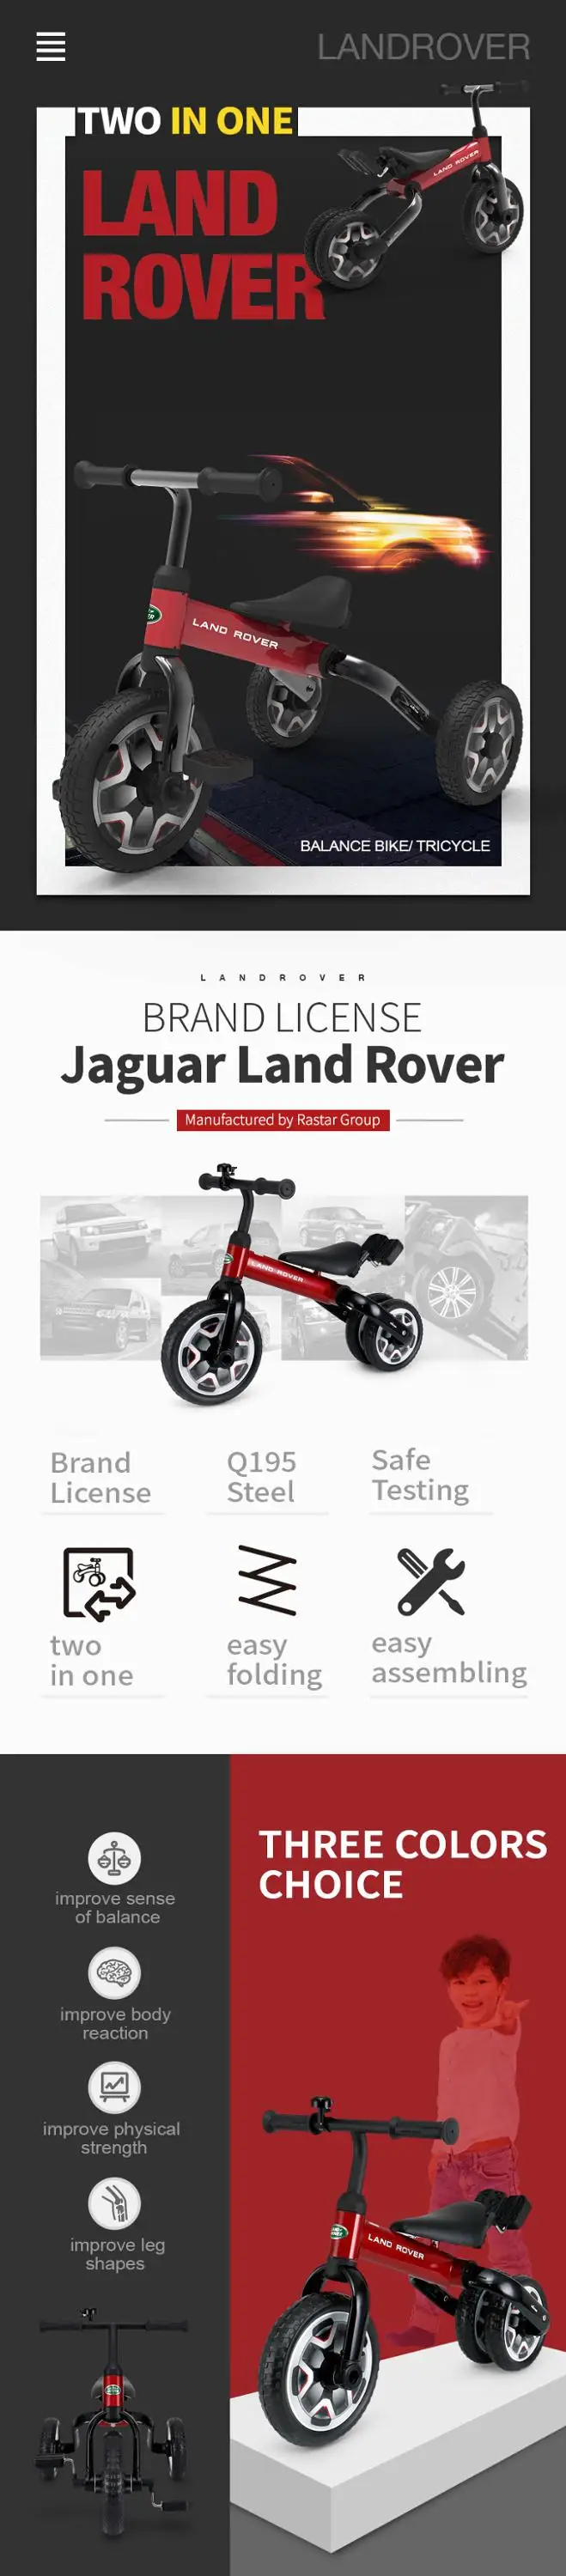 land rover push bike